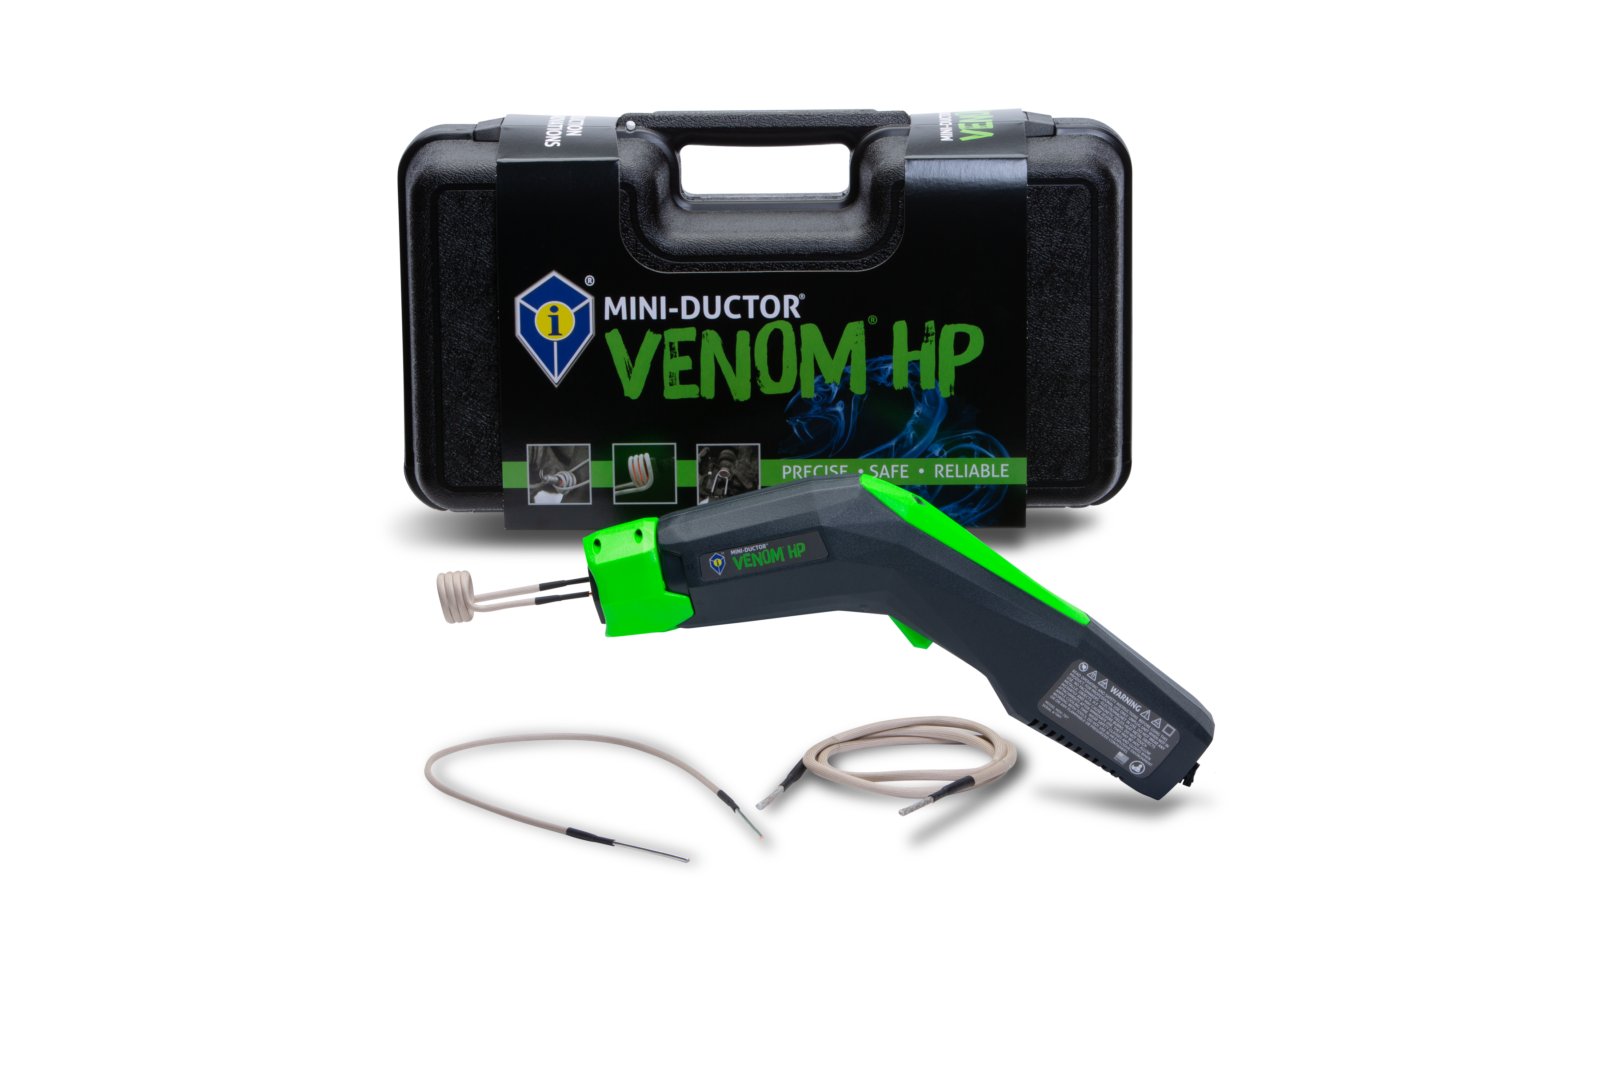 Venom HP case tool and acc